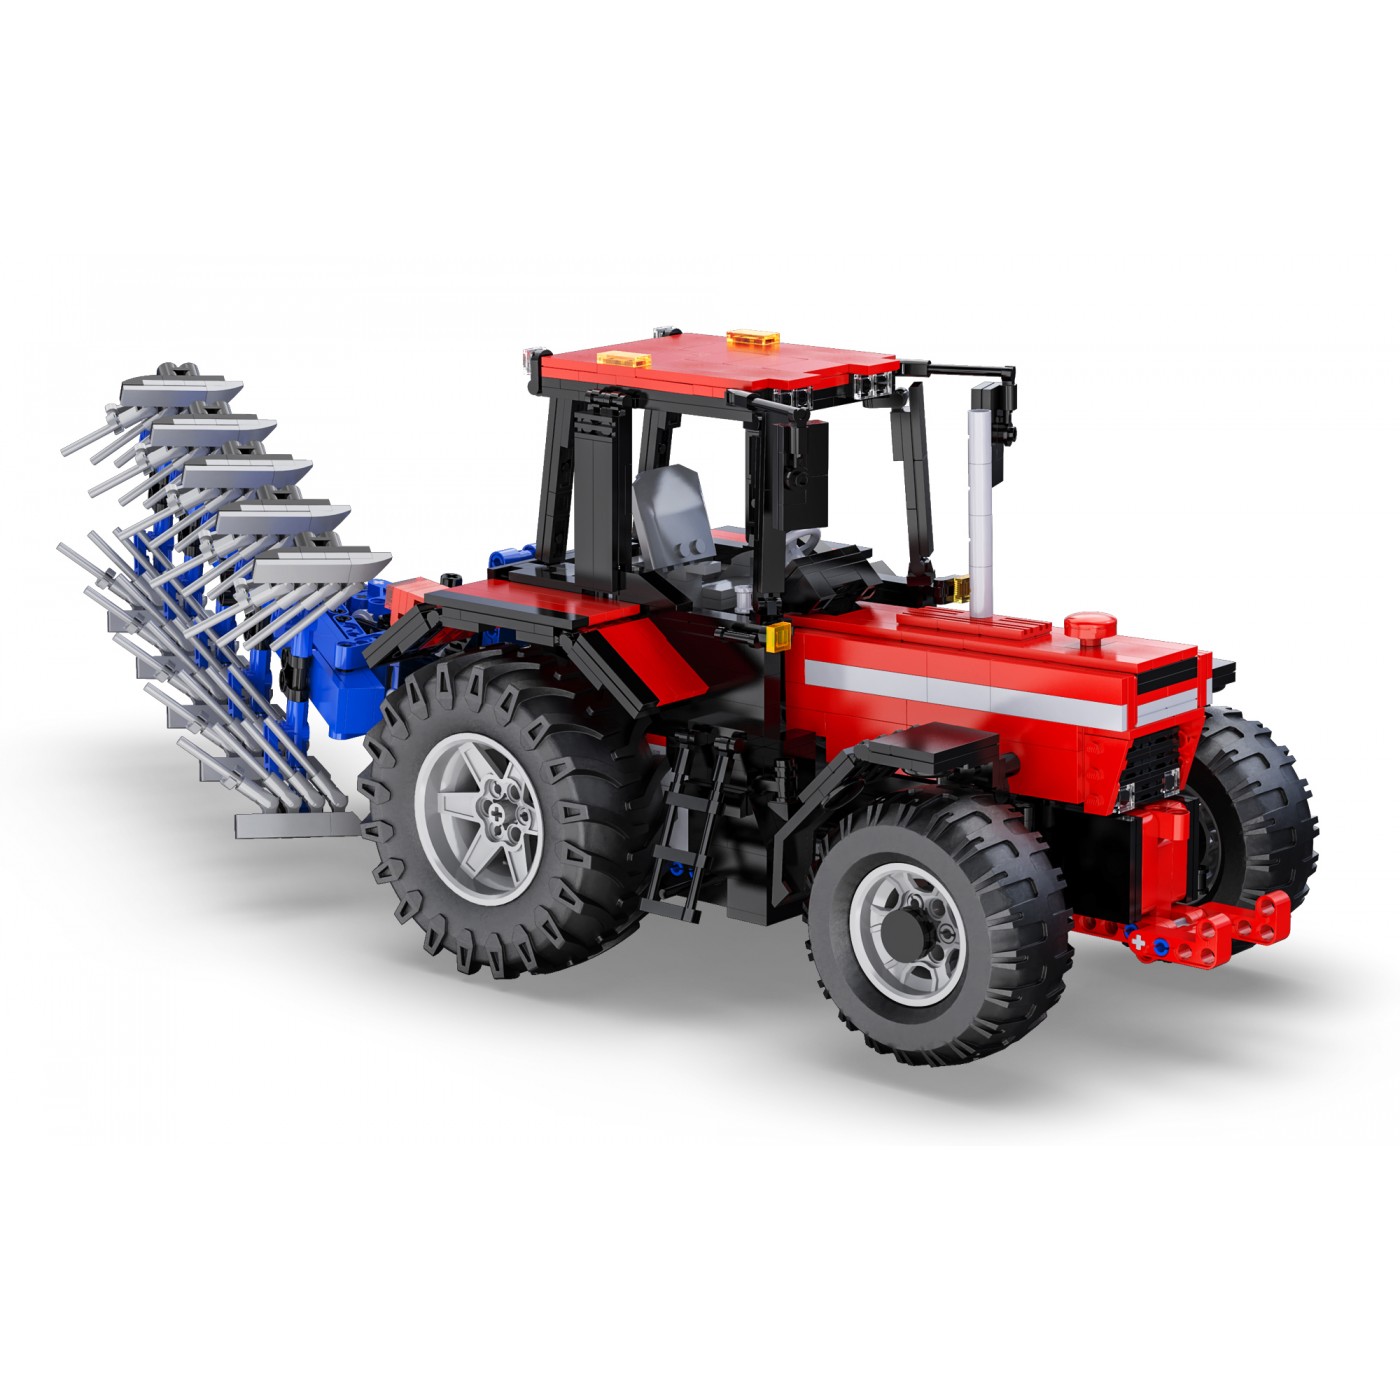 Tractor blocks 1675 pcs EE